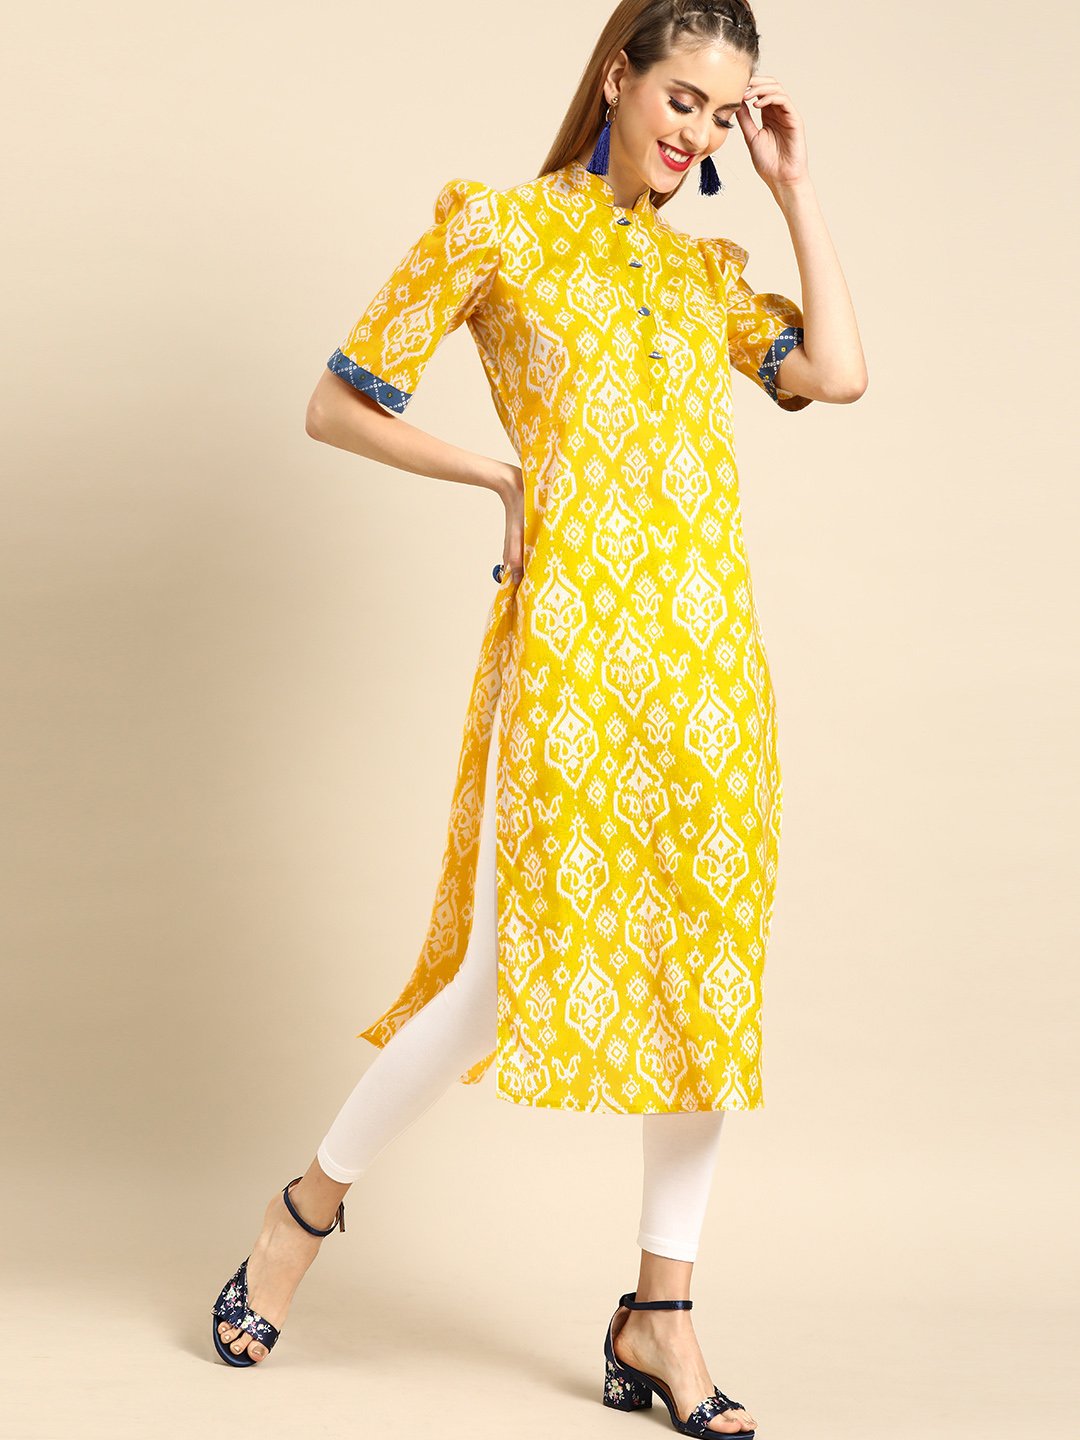 Women's Nayo Yellow Calf Length Short Sleeves Straight Ethnic Motifs Printed Cotton Kurta With Jacket - Nayo Clothing